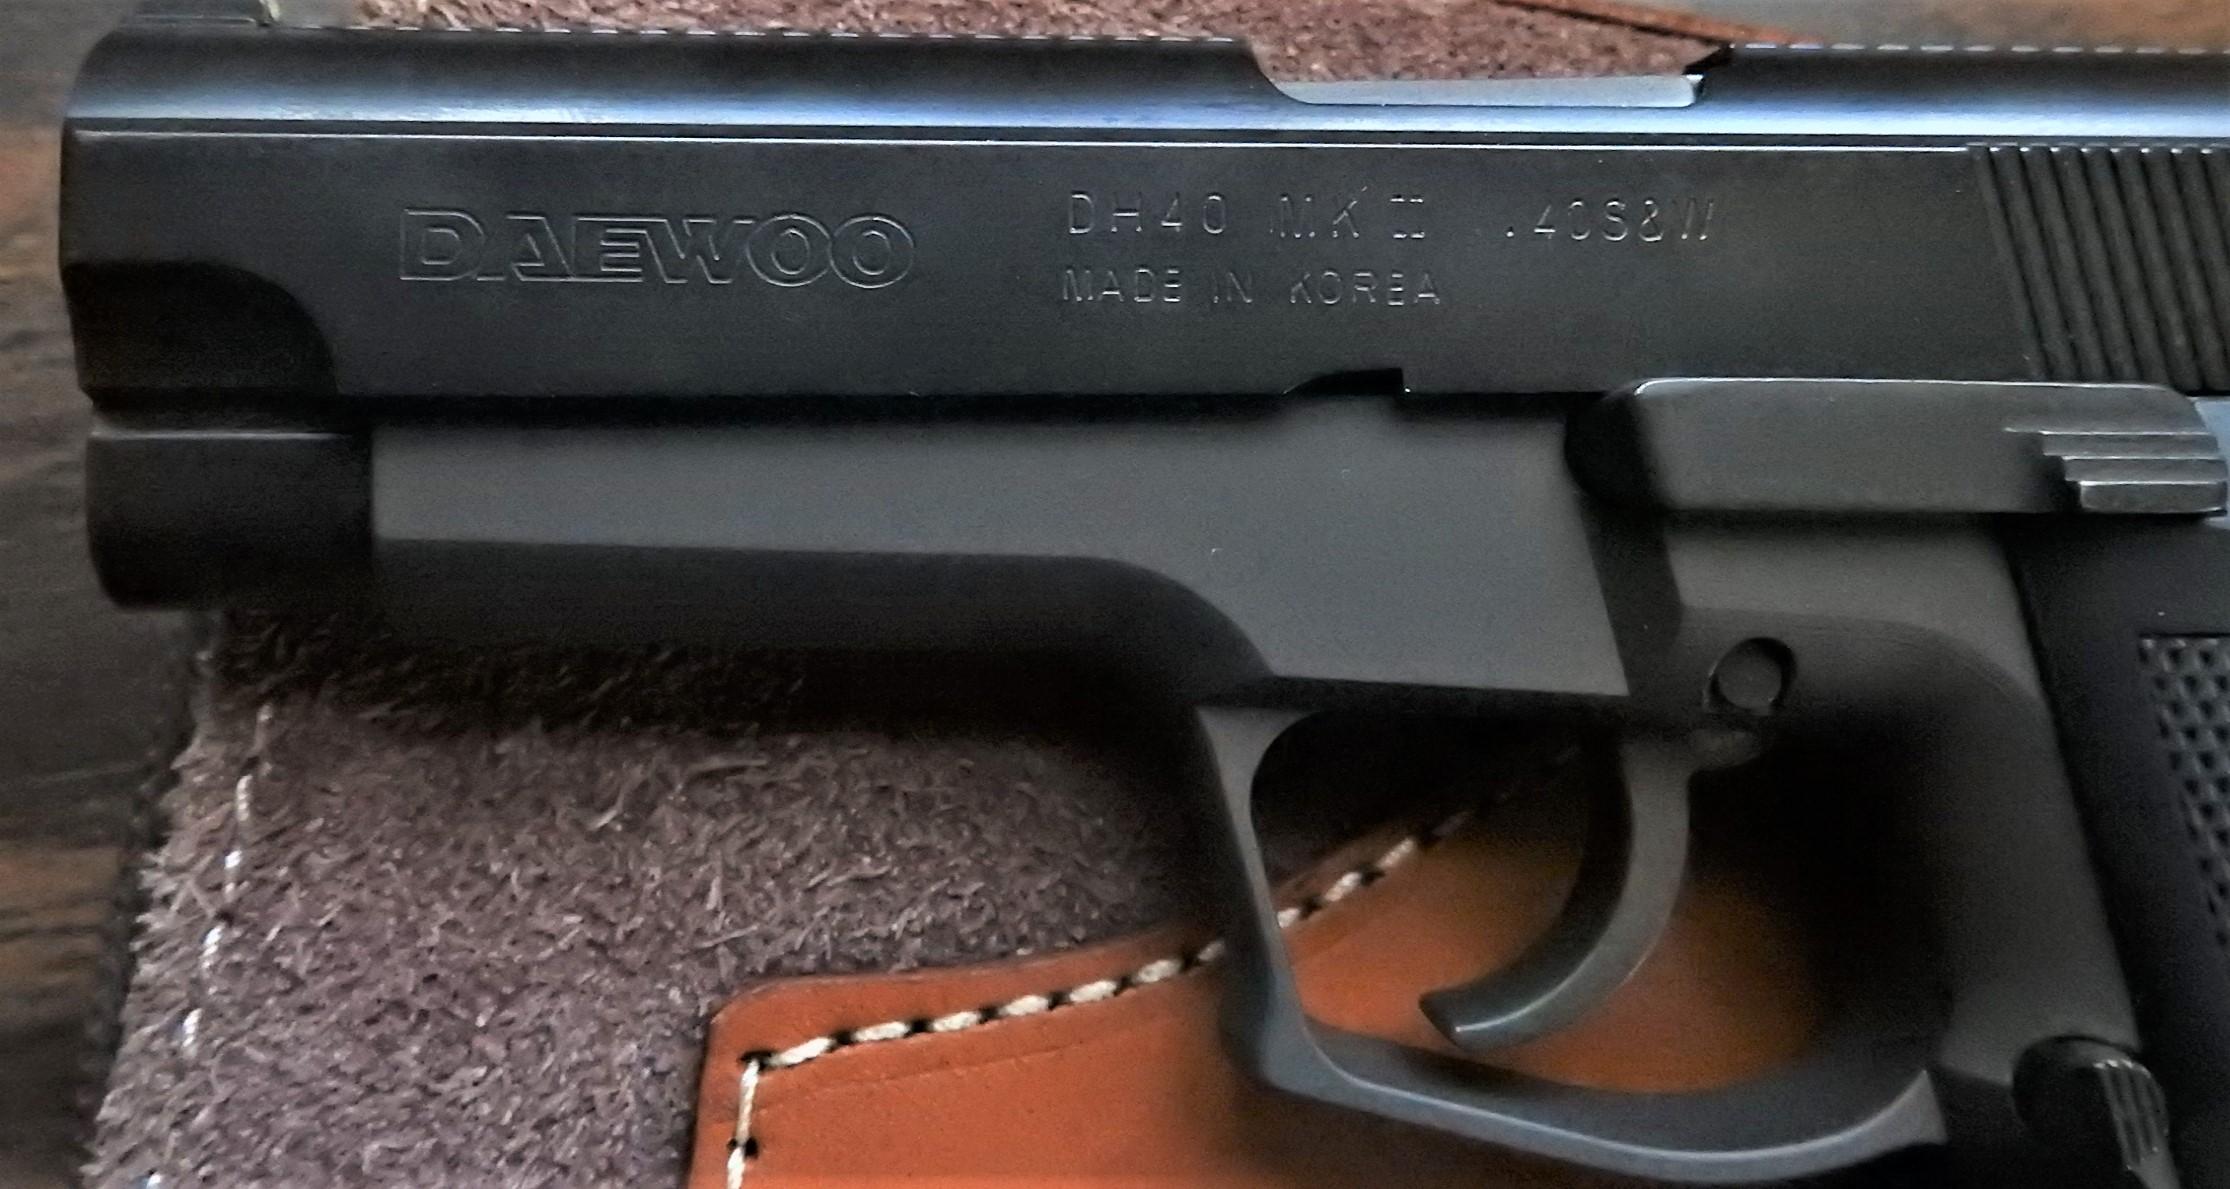 Daewoo DH40 MK2 .40 semi auto pistol